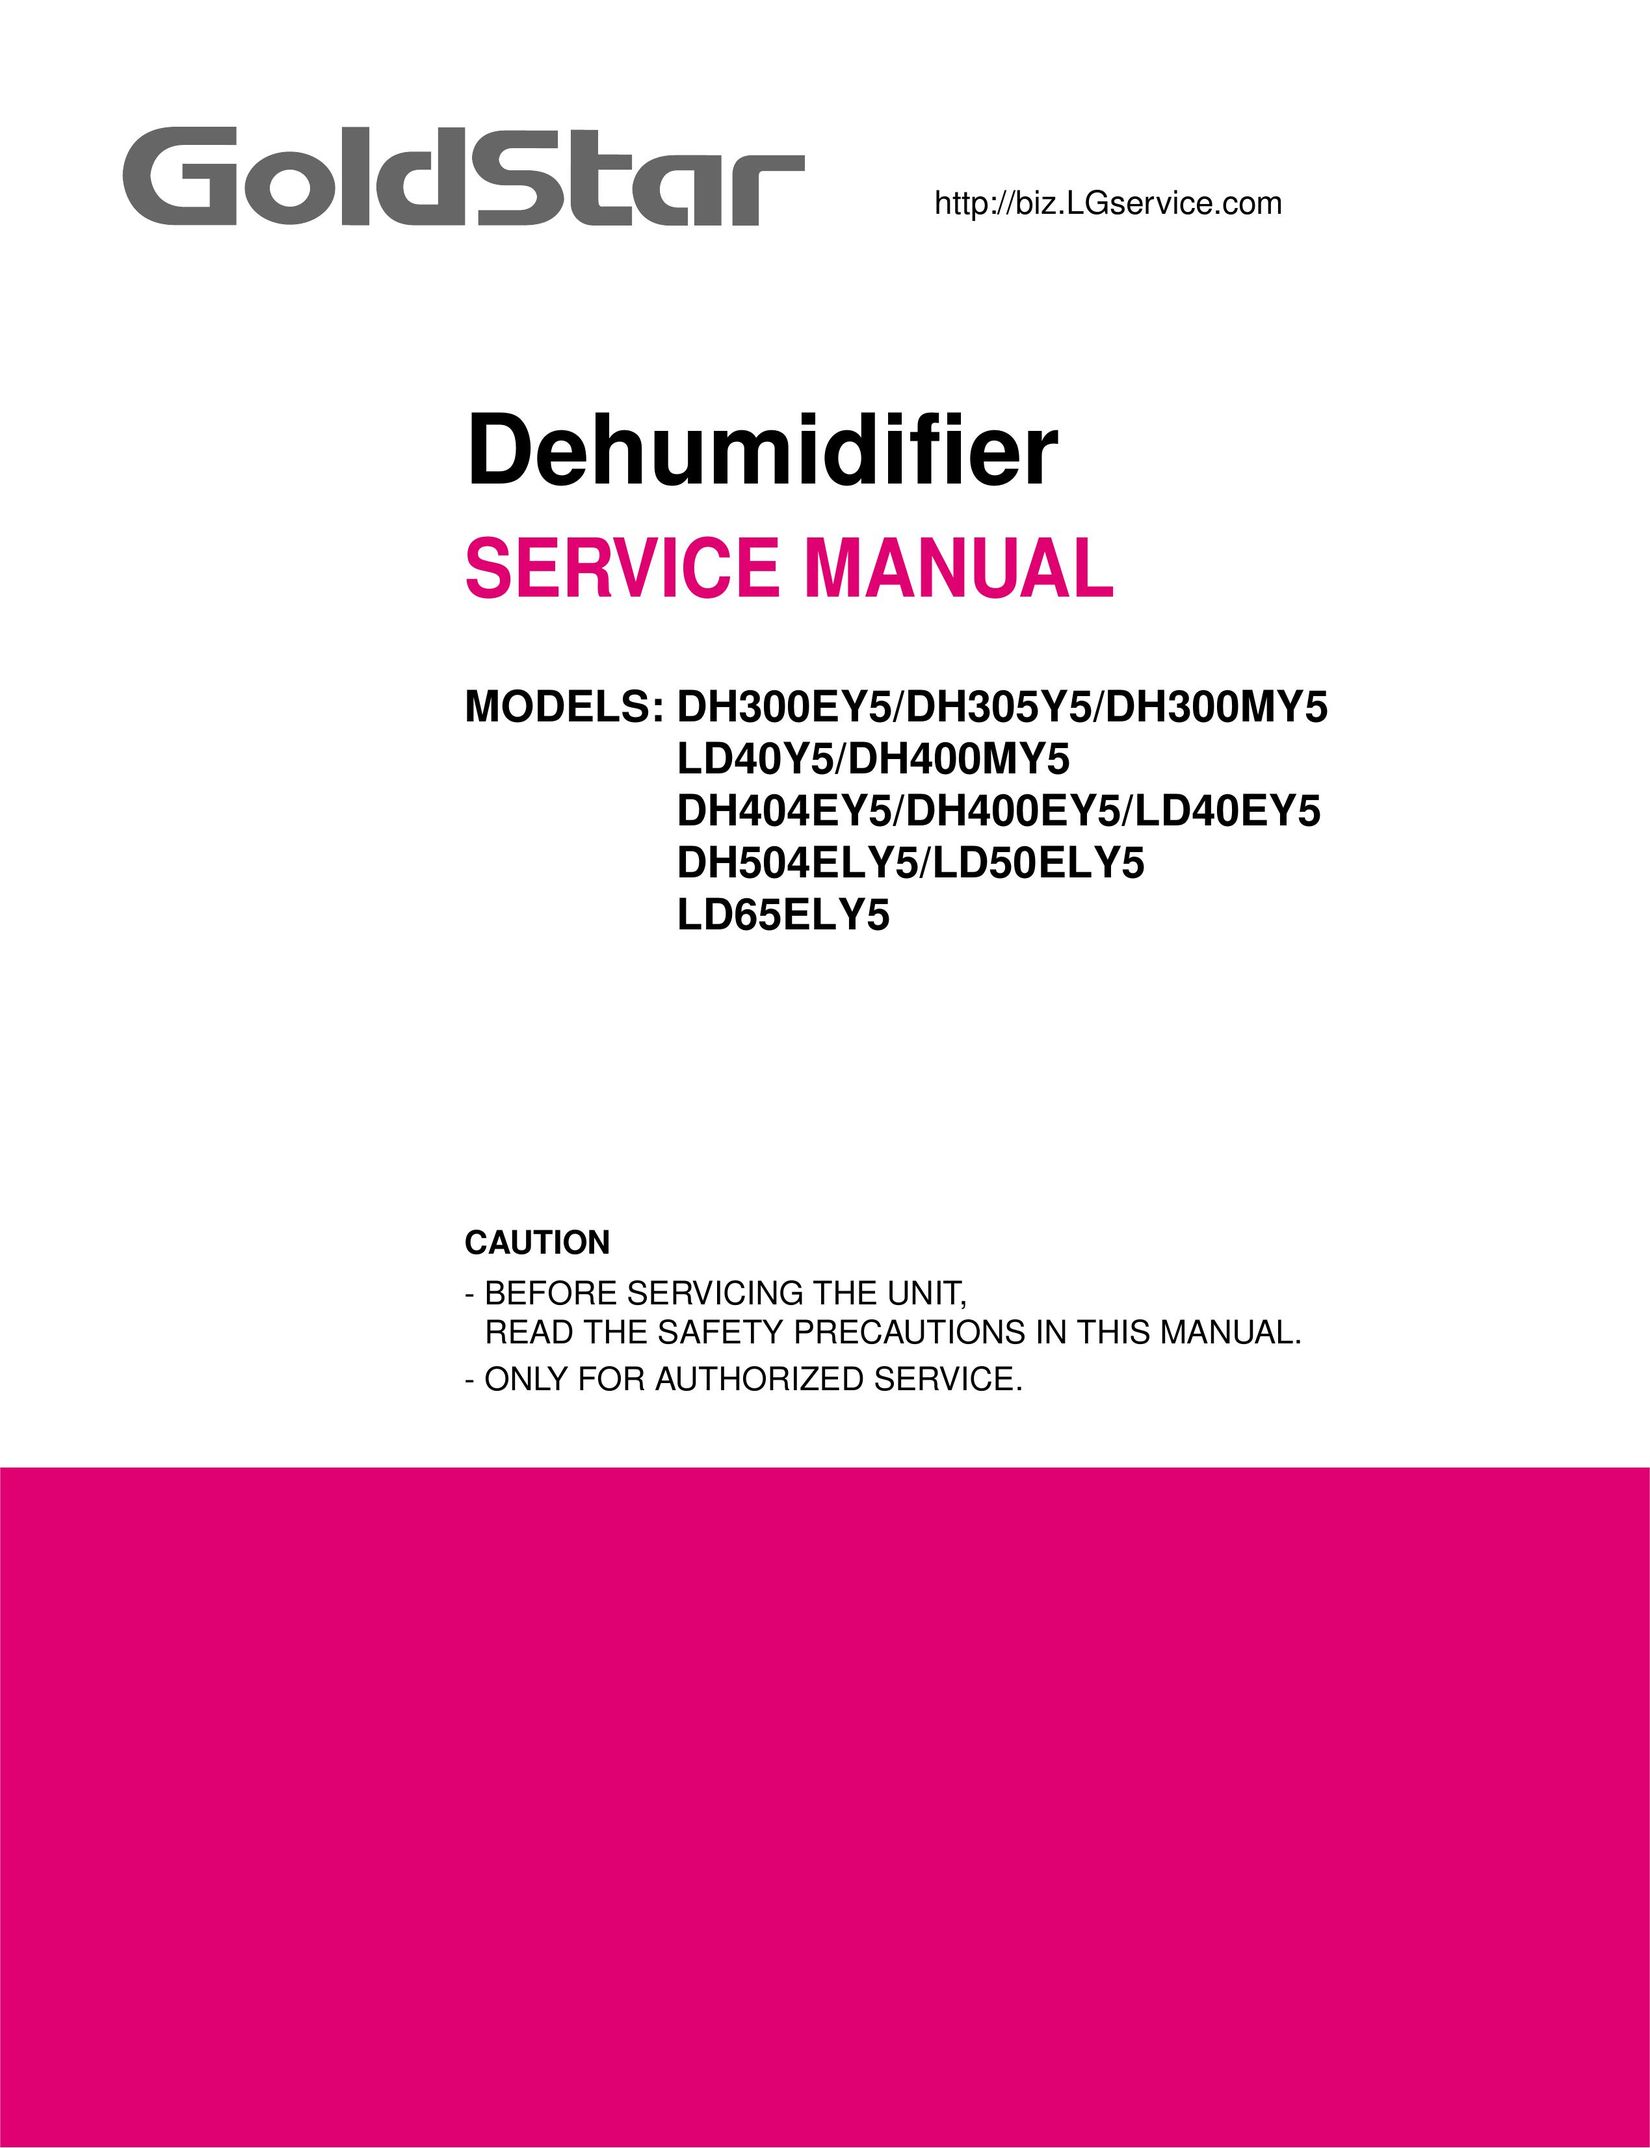 Frigidaire LD65ELY5 Dehumidifier User Manual